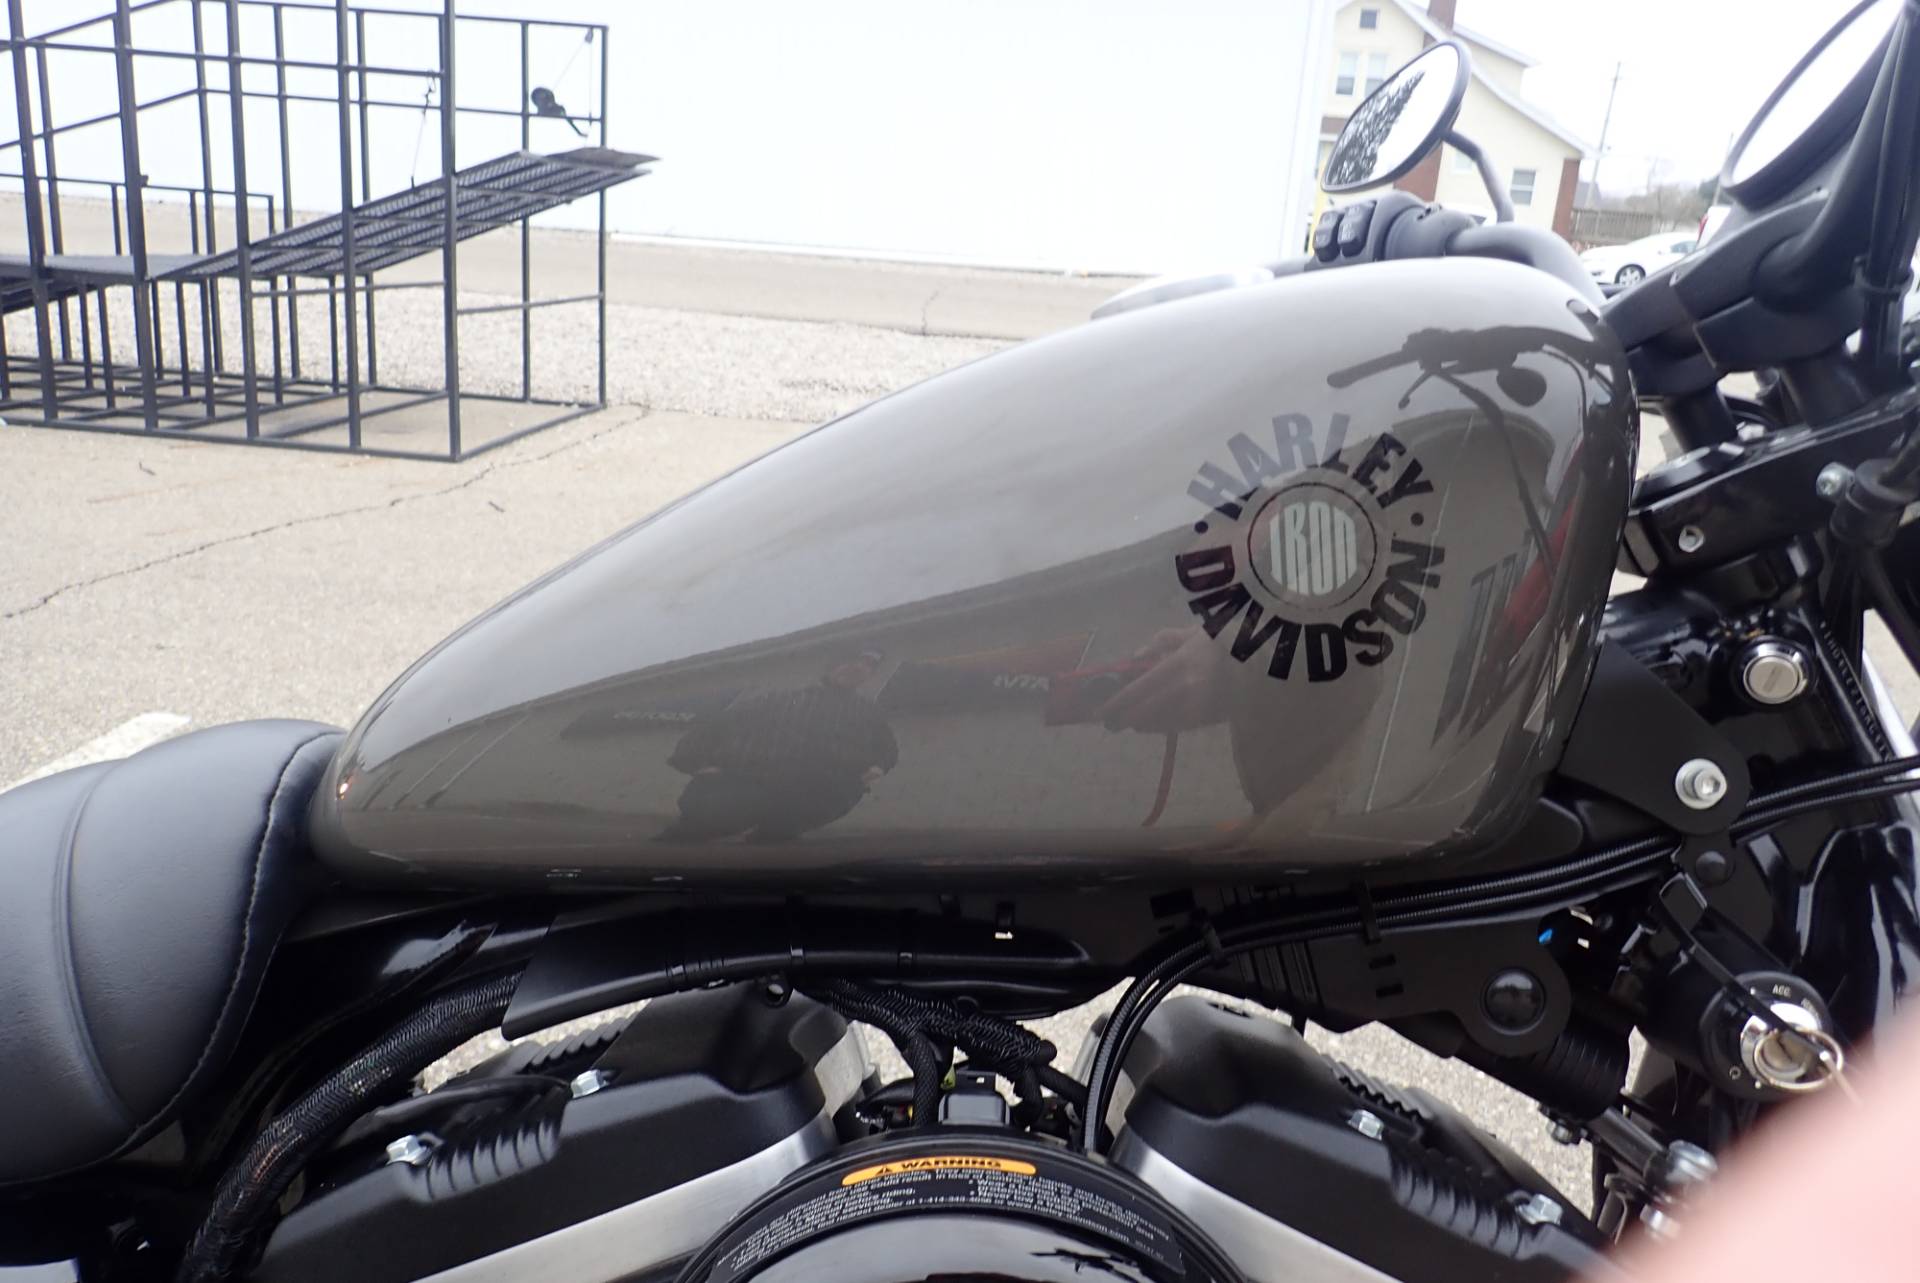 2019 Harley-Davidson Iron 883™ in Massillon, Ohio - Photo 3